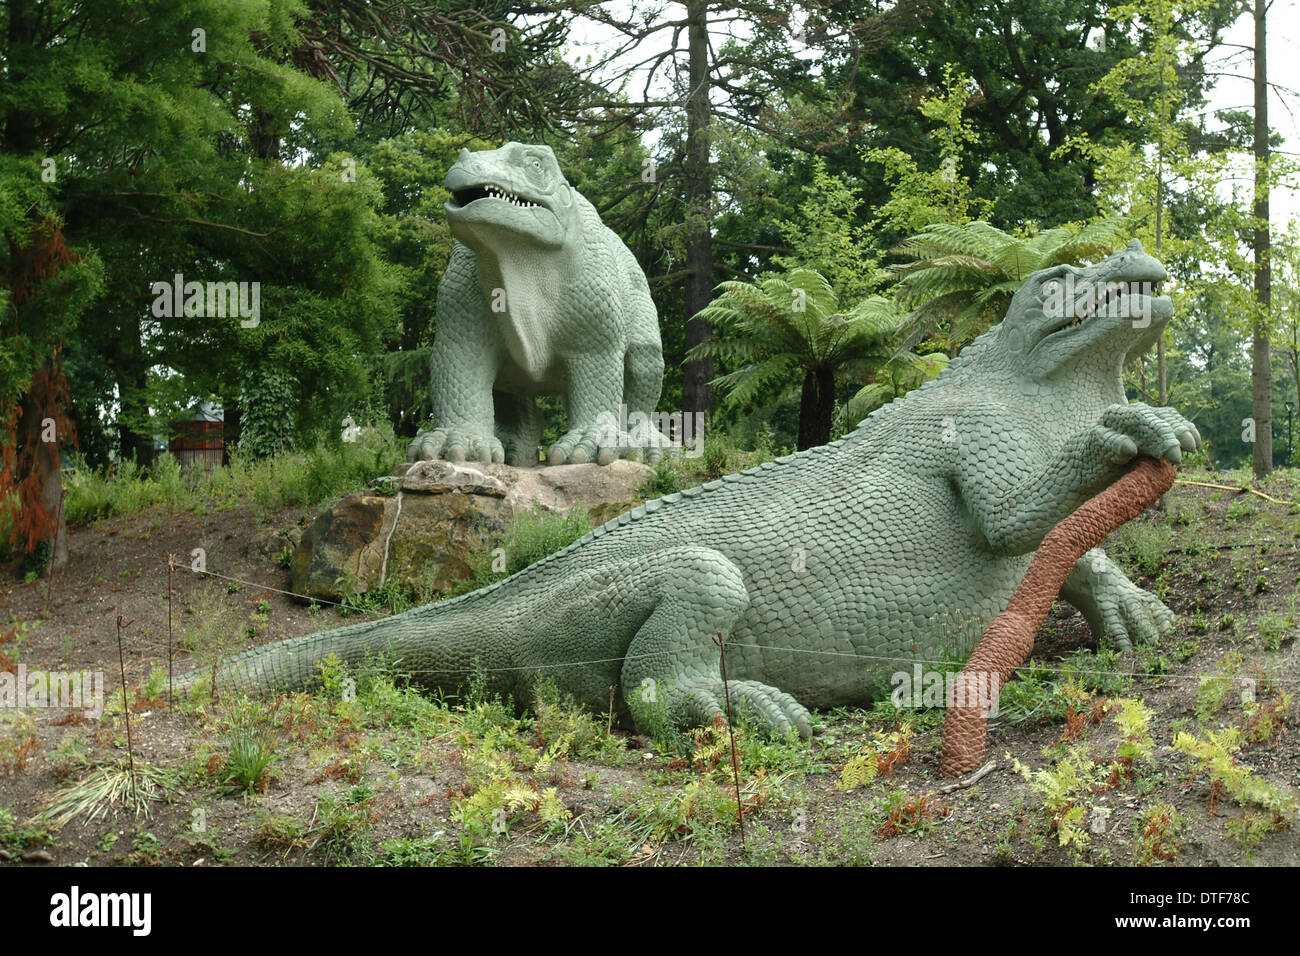 Crystal Palace-Dinosaurier-Modelle Stockfoto